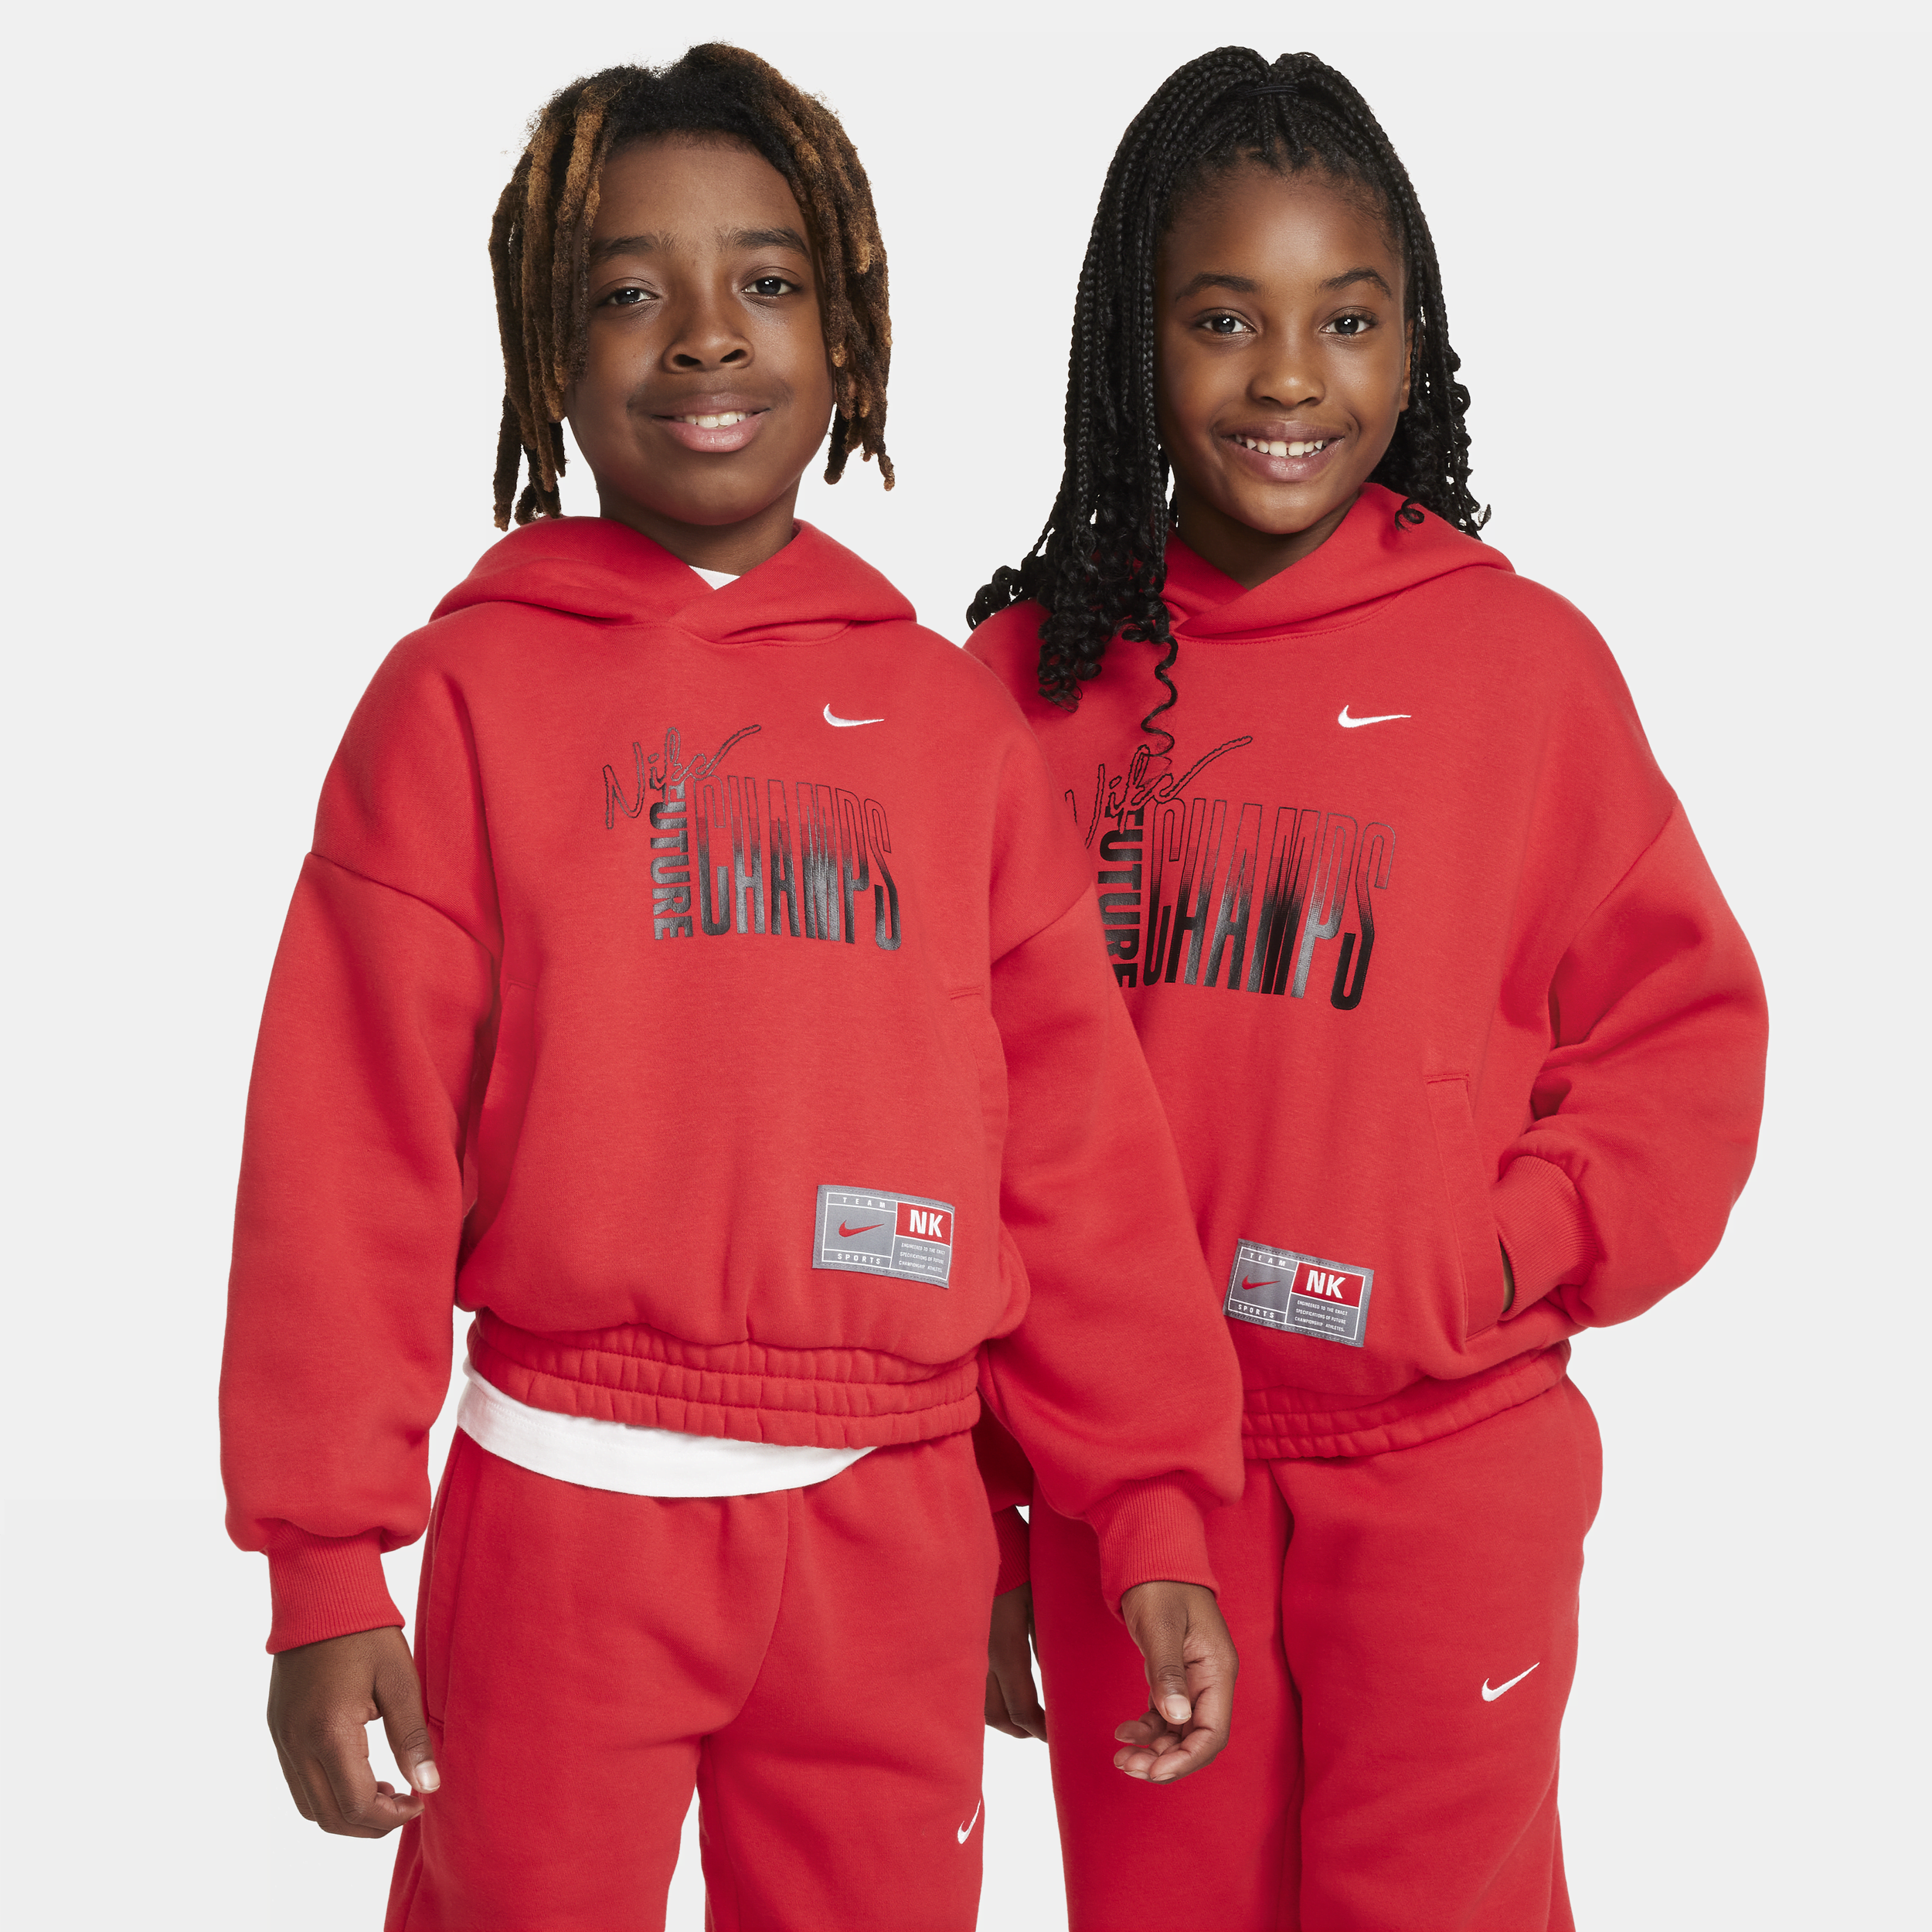 Nike Culture of Basketball Sudadera con capucha de tejido Fleece - Niño/a - Rojo